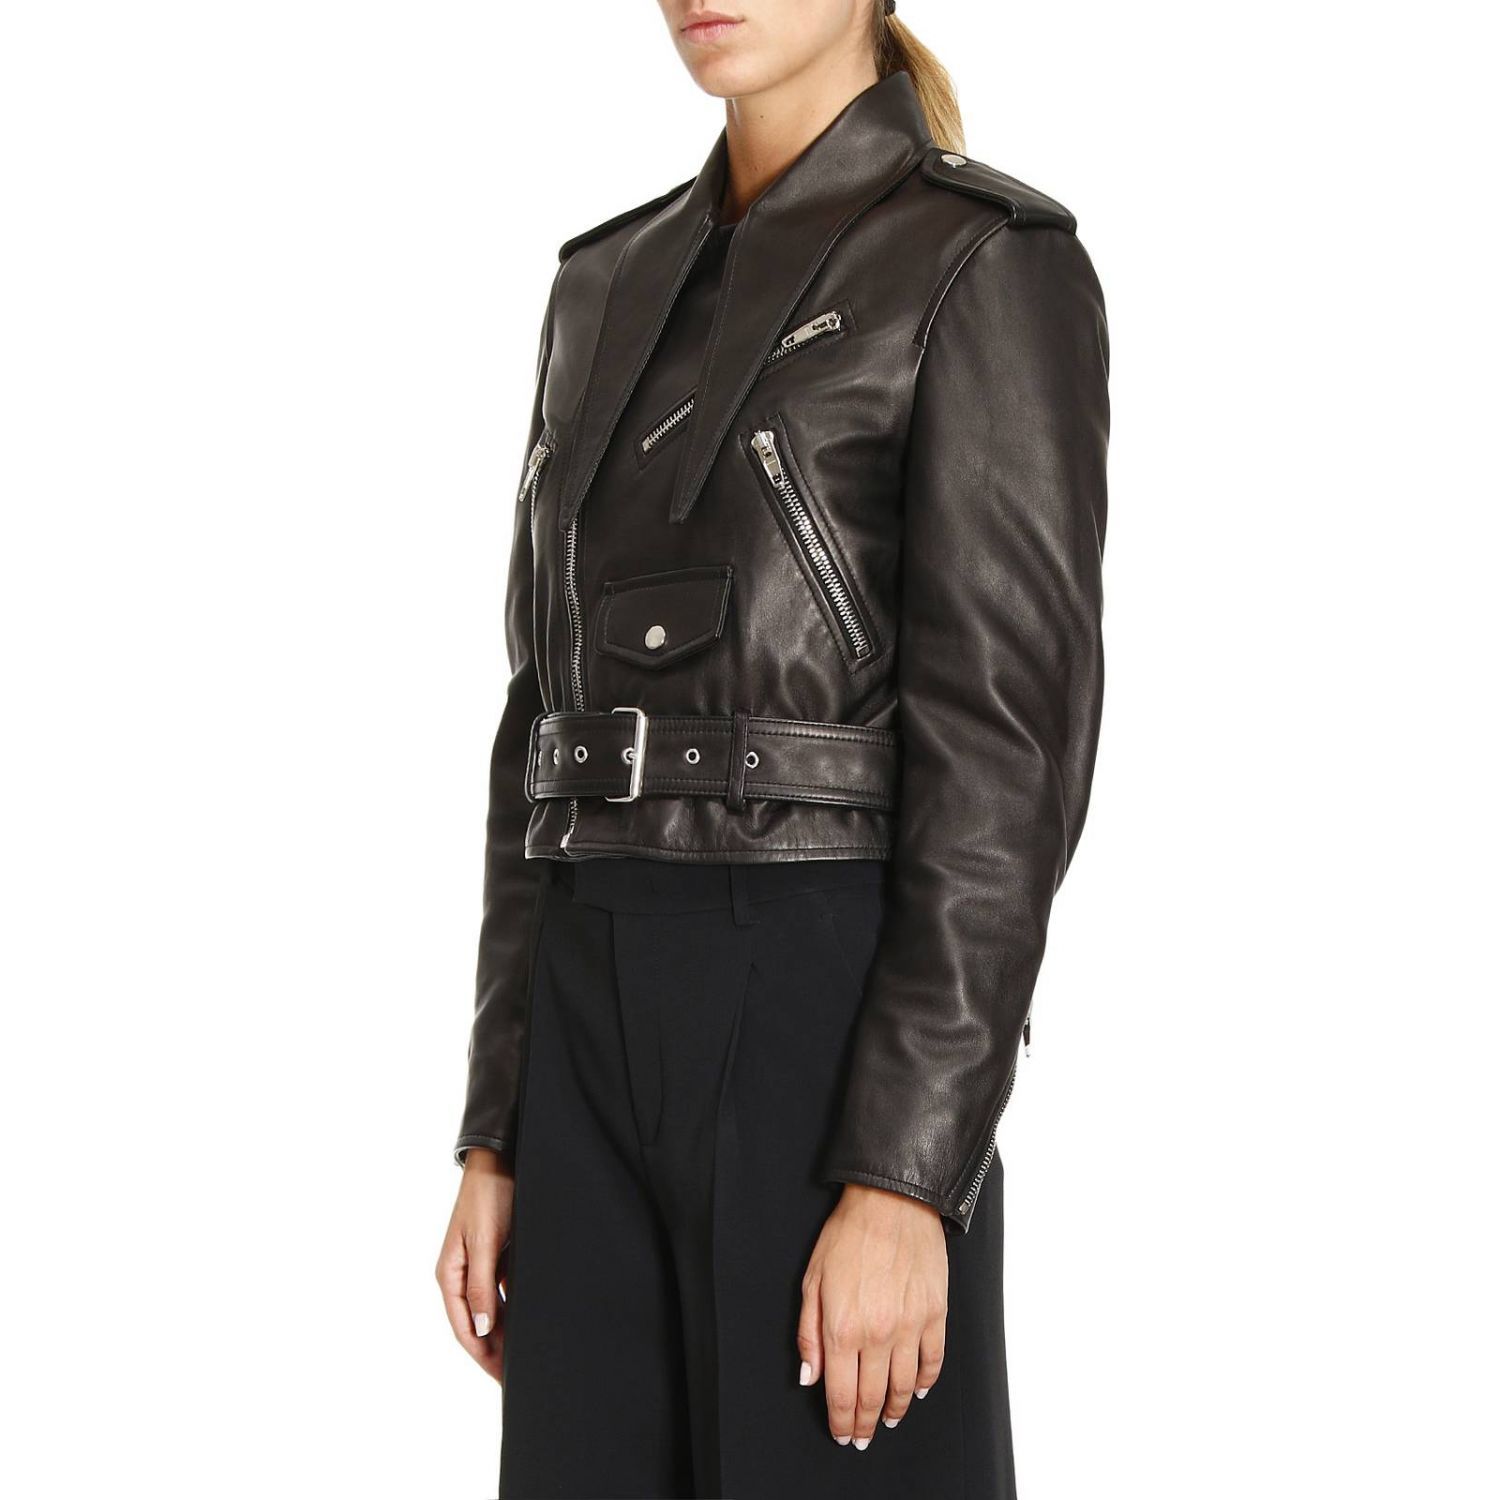 Balenciaga - Jacket Jacket Women Balenciaga - black, Women's Jackets ...